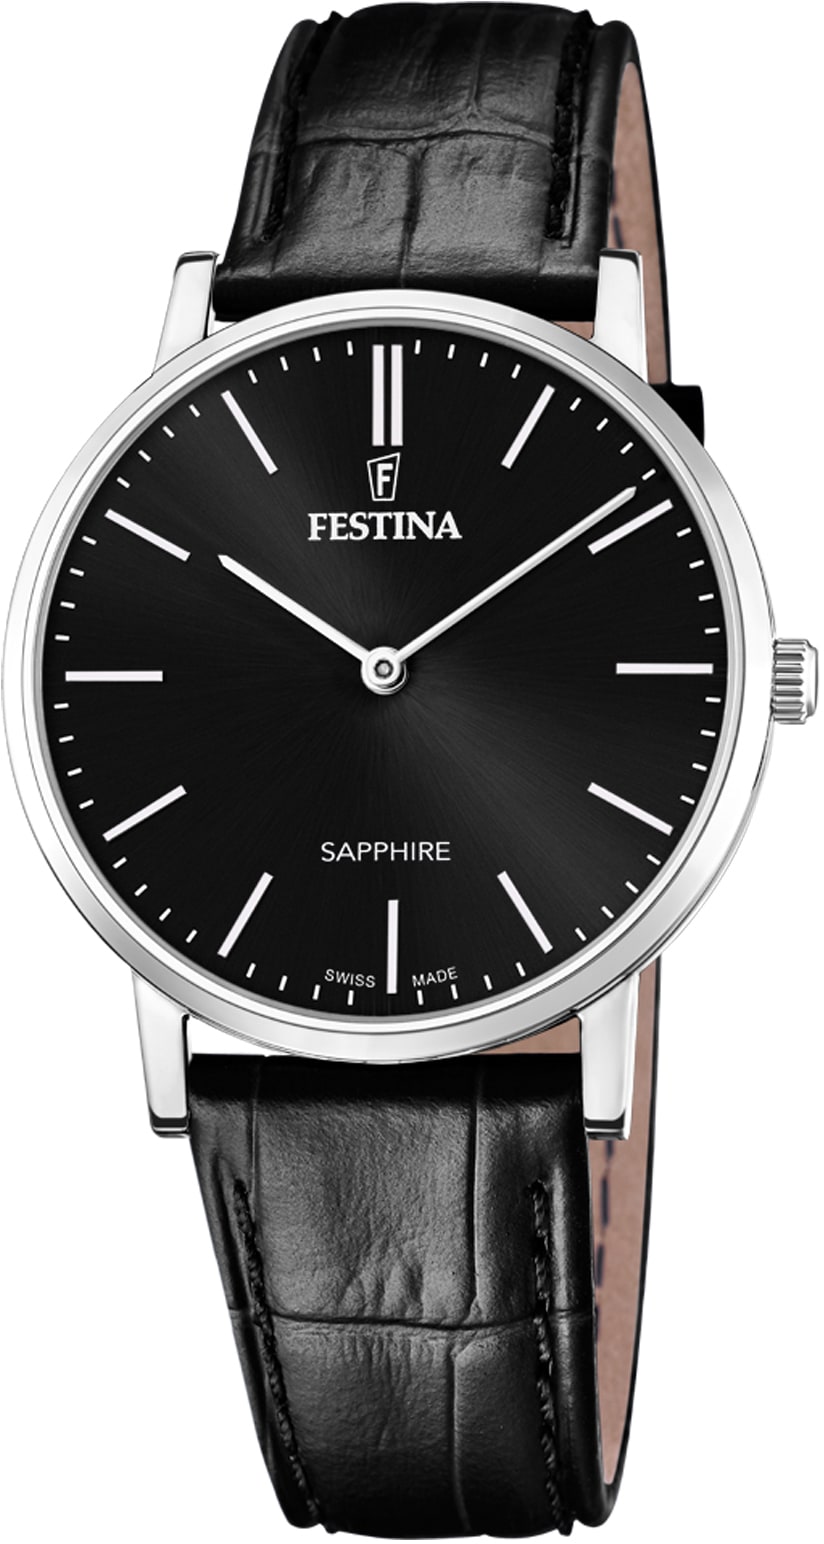 Uhr Made, »Festina Festina Swiss online F20012/4« bei OTTO shoppen Schweizer